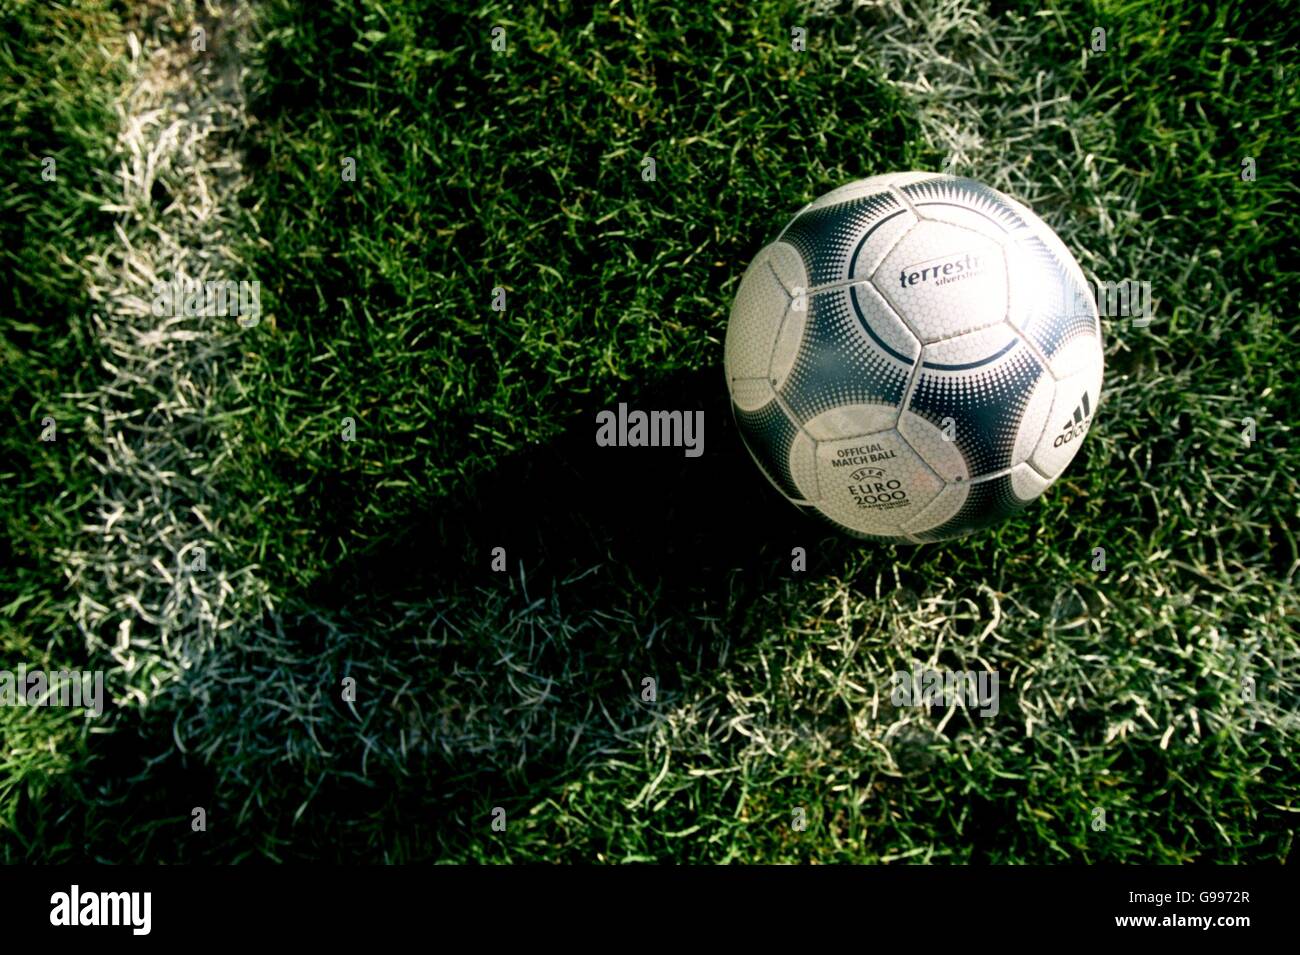 Soccer - New Adidas ball for Euro 2000 - Adidas Terrestra Silverstream  Stock Photo - Alamy